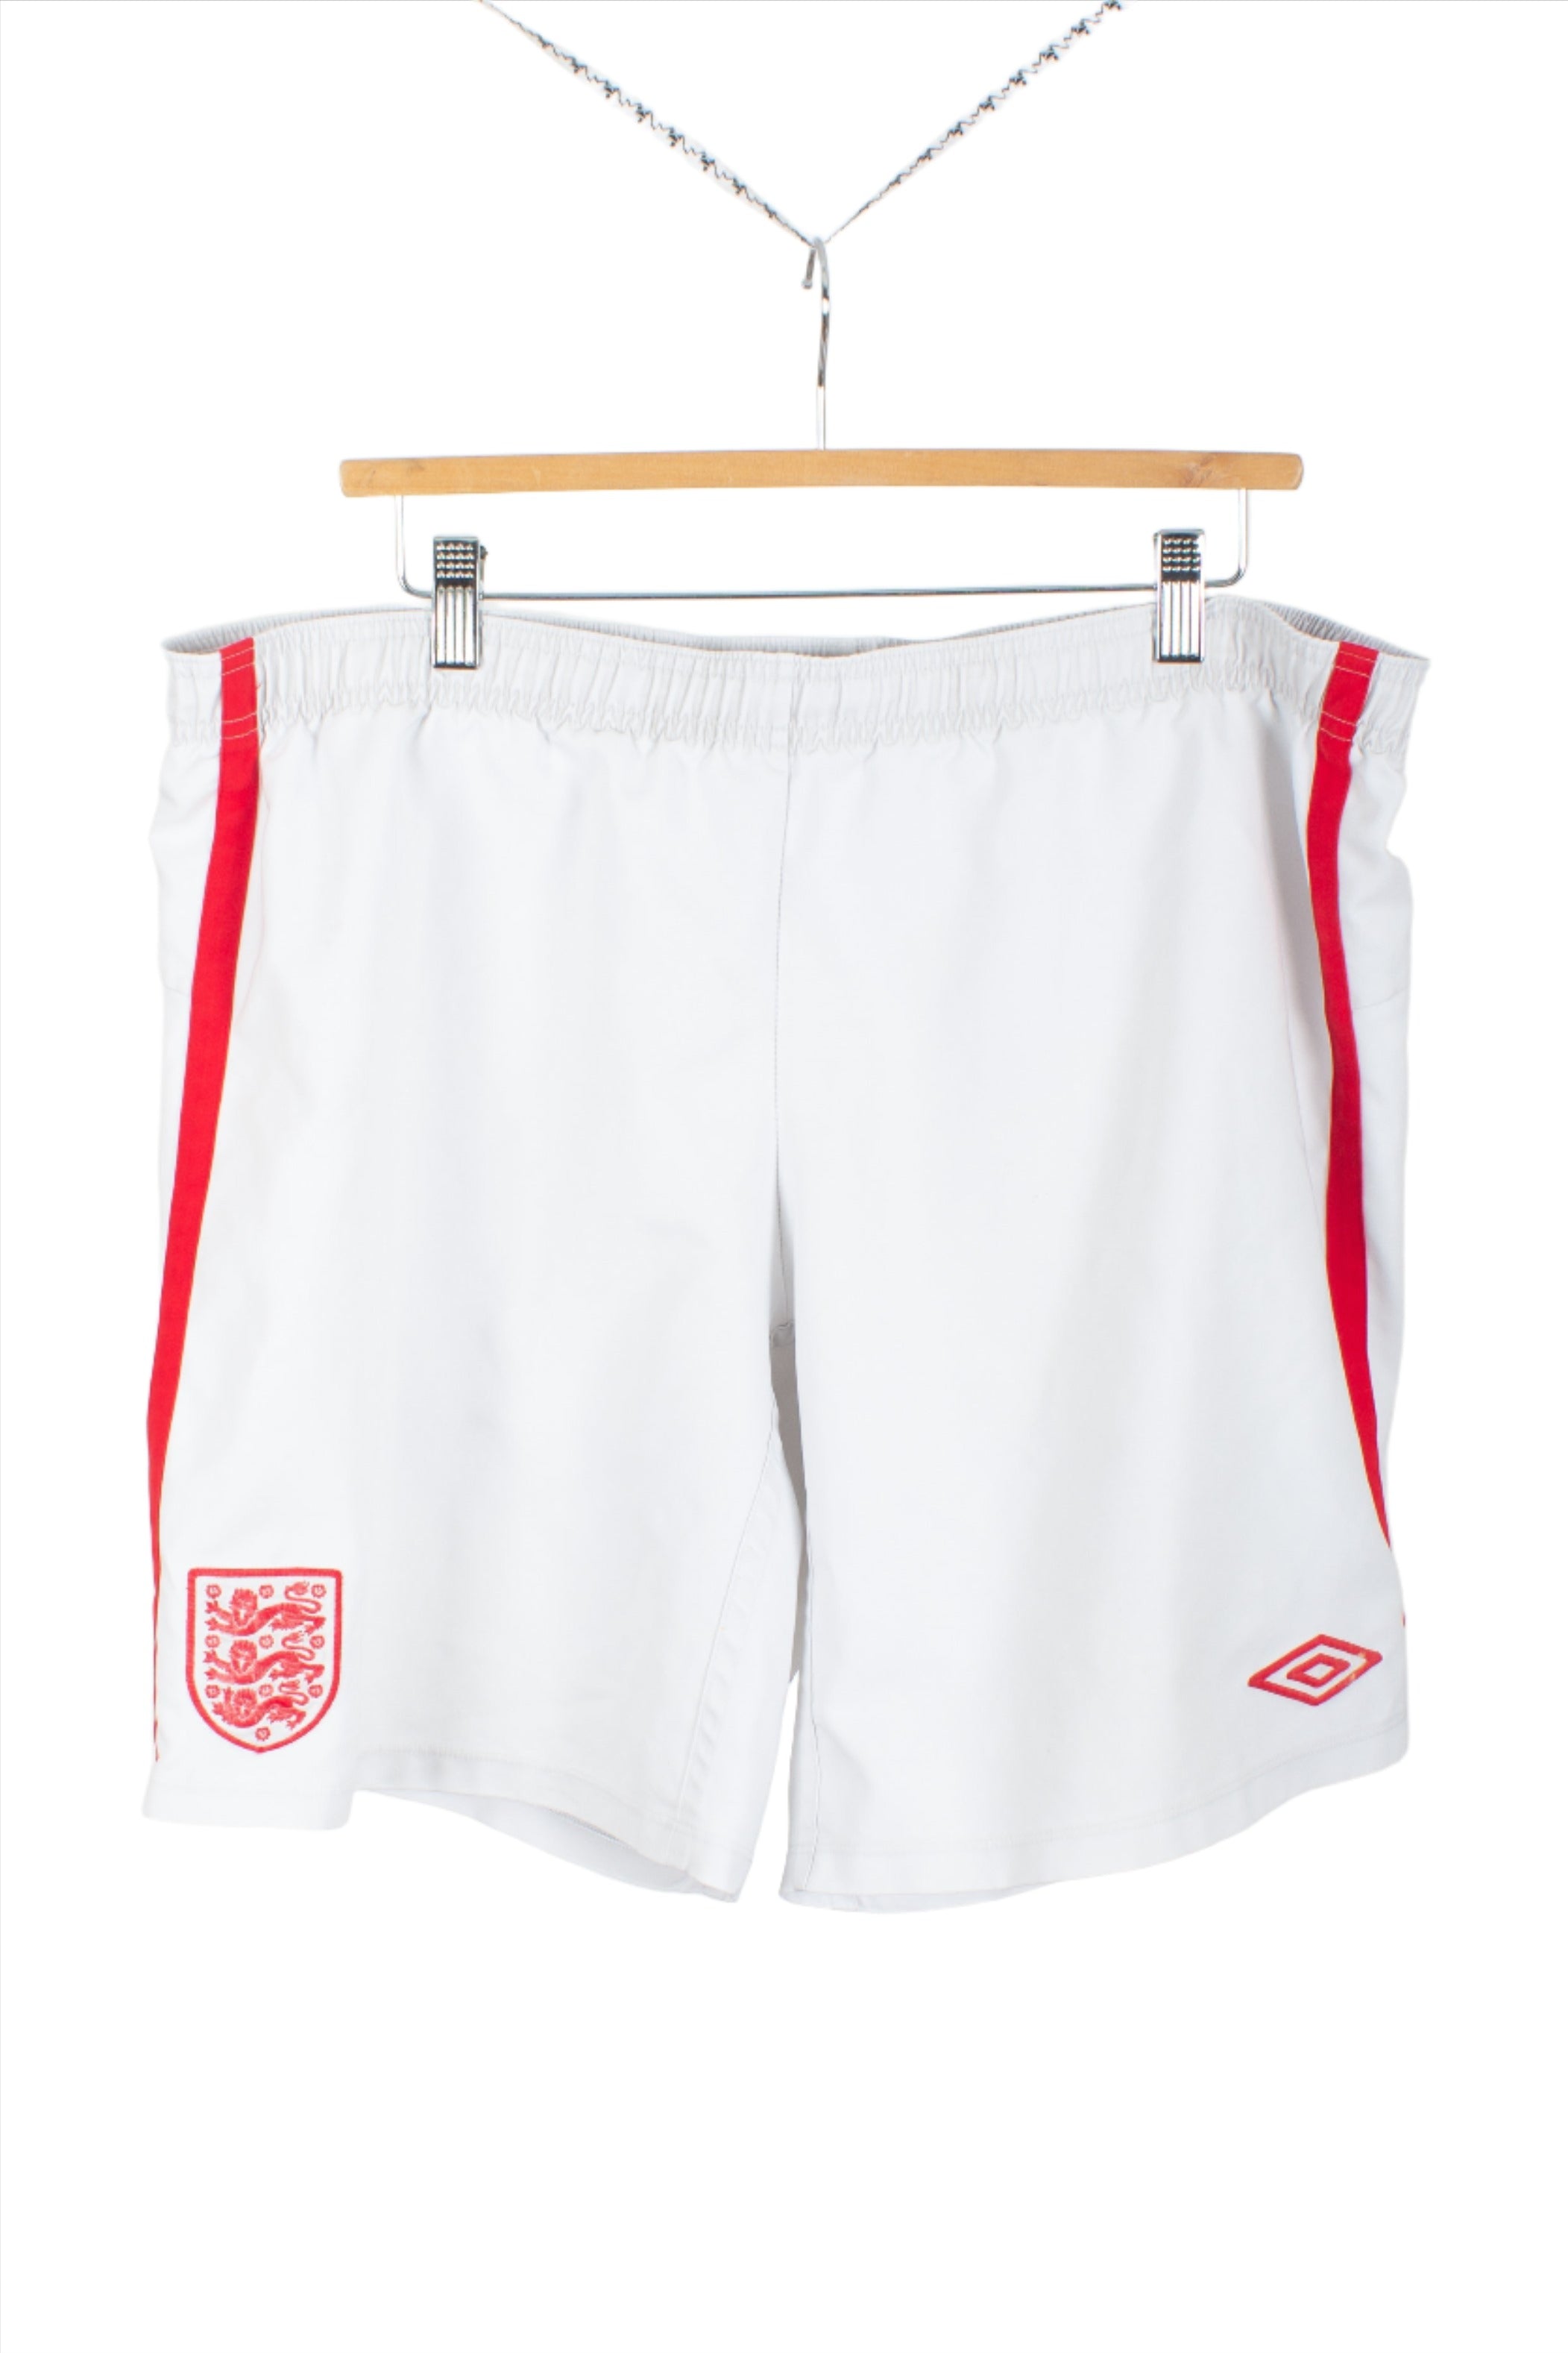 England 2010 Shorts (XL)